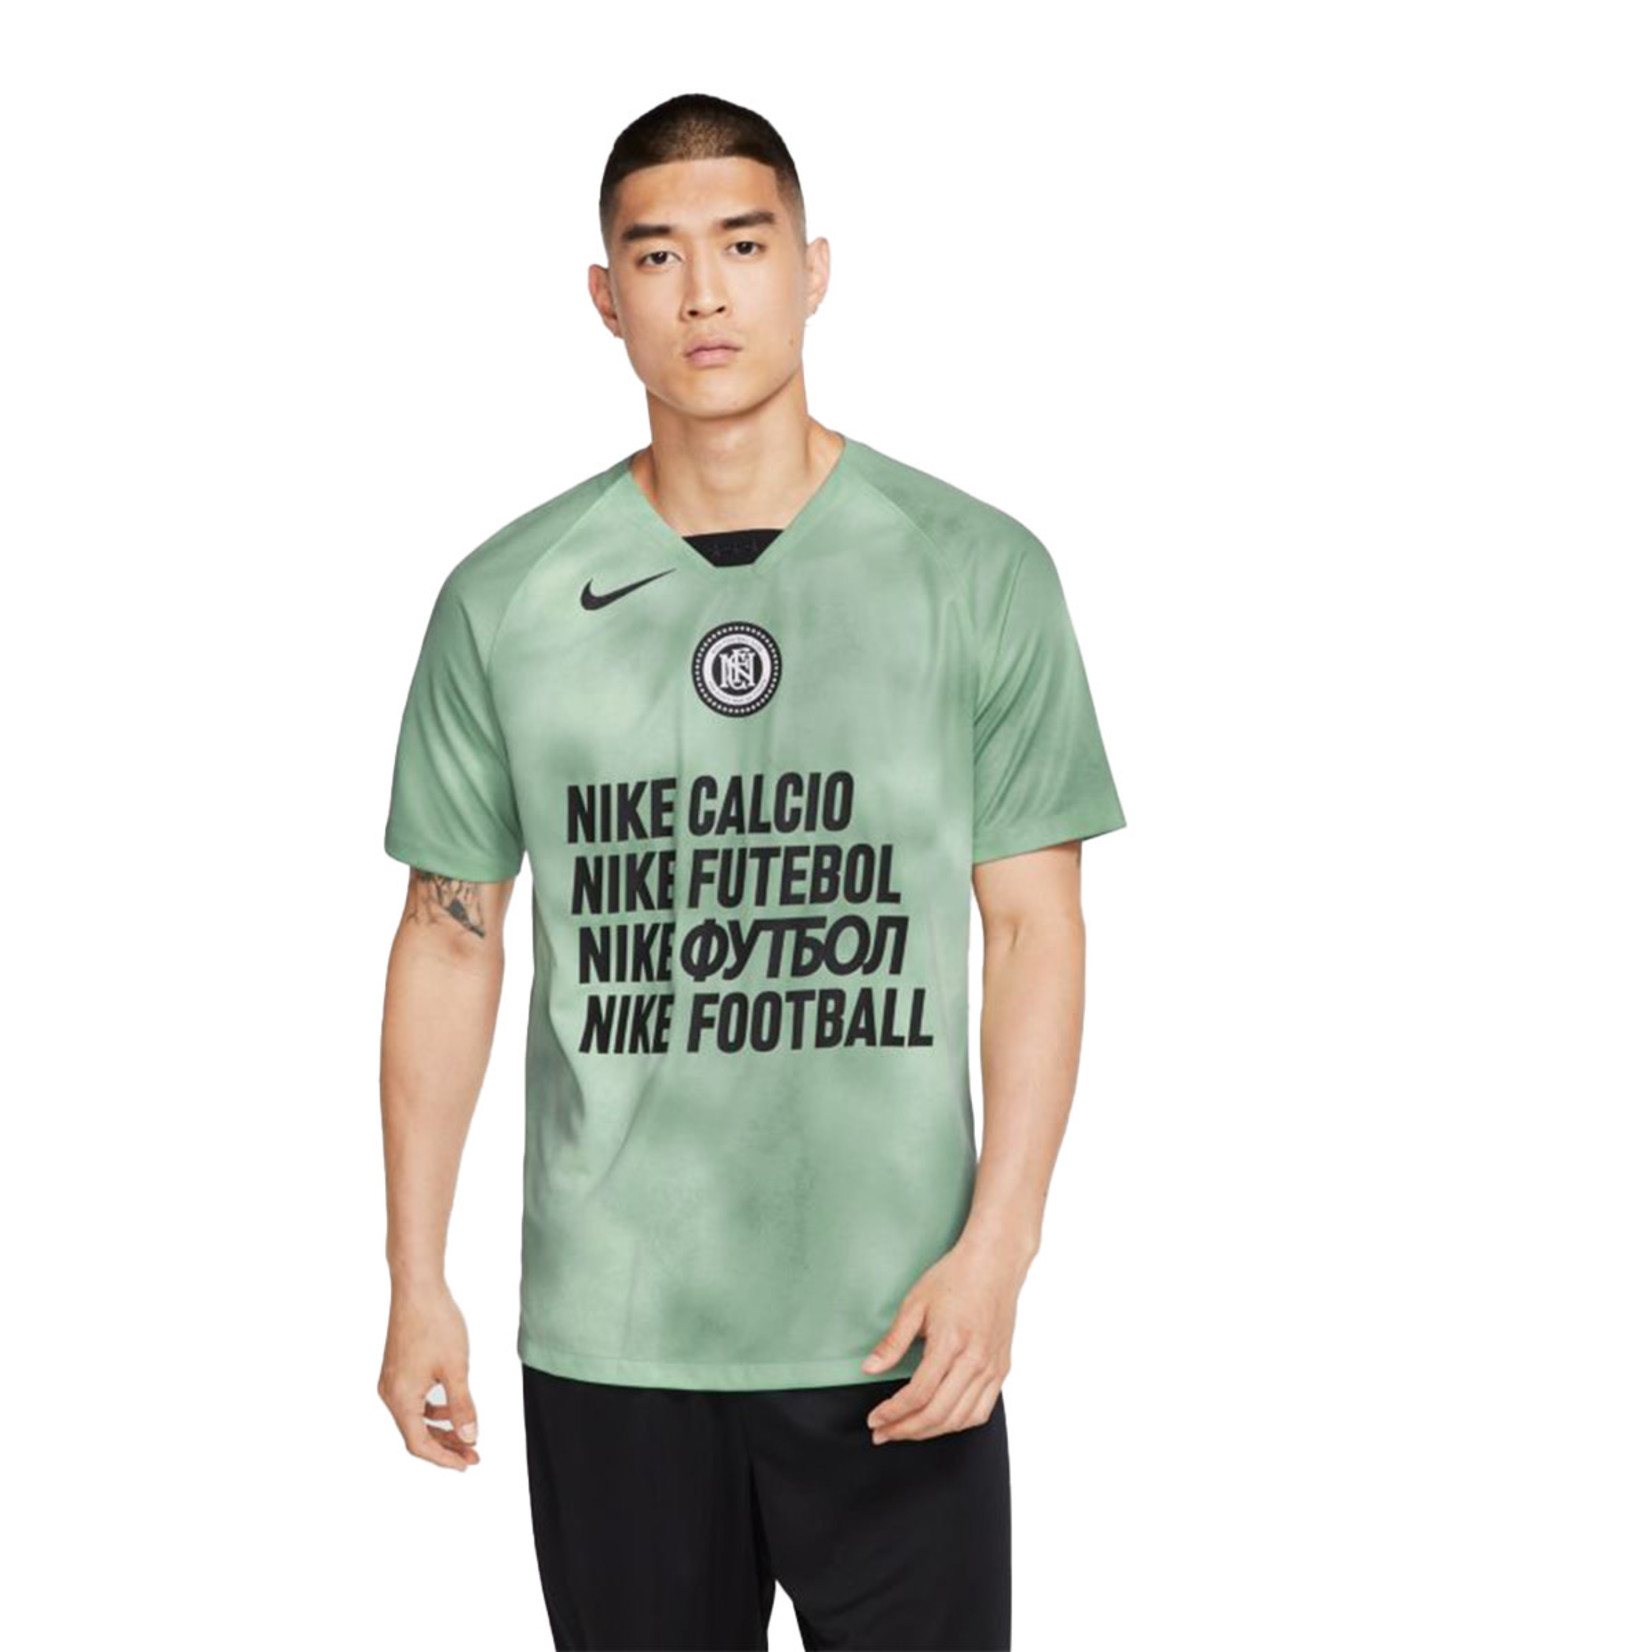 Nike Soccer Dri-FIT F.C. logo printed t-shirt in black